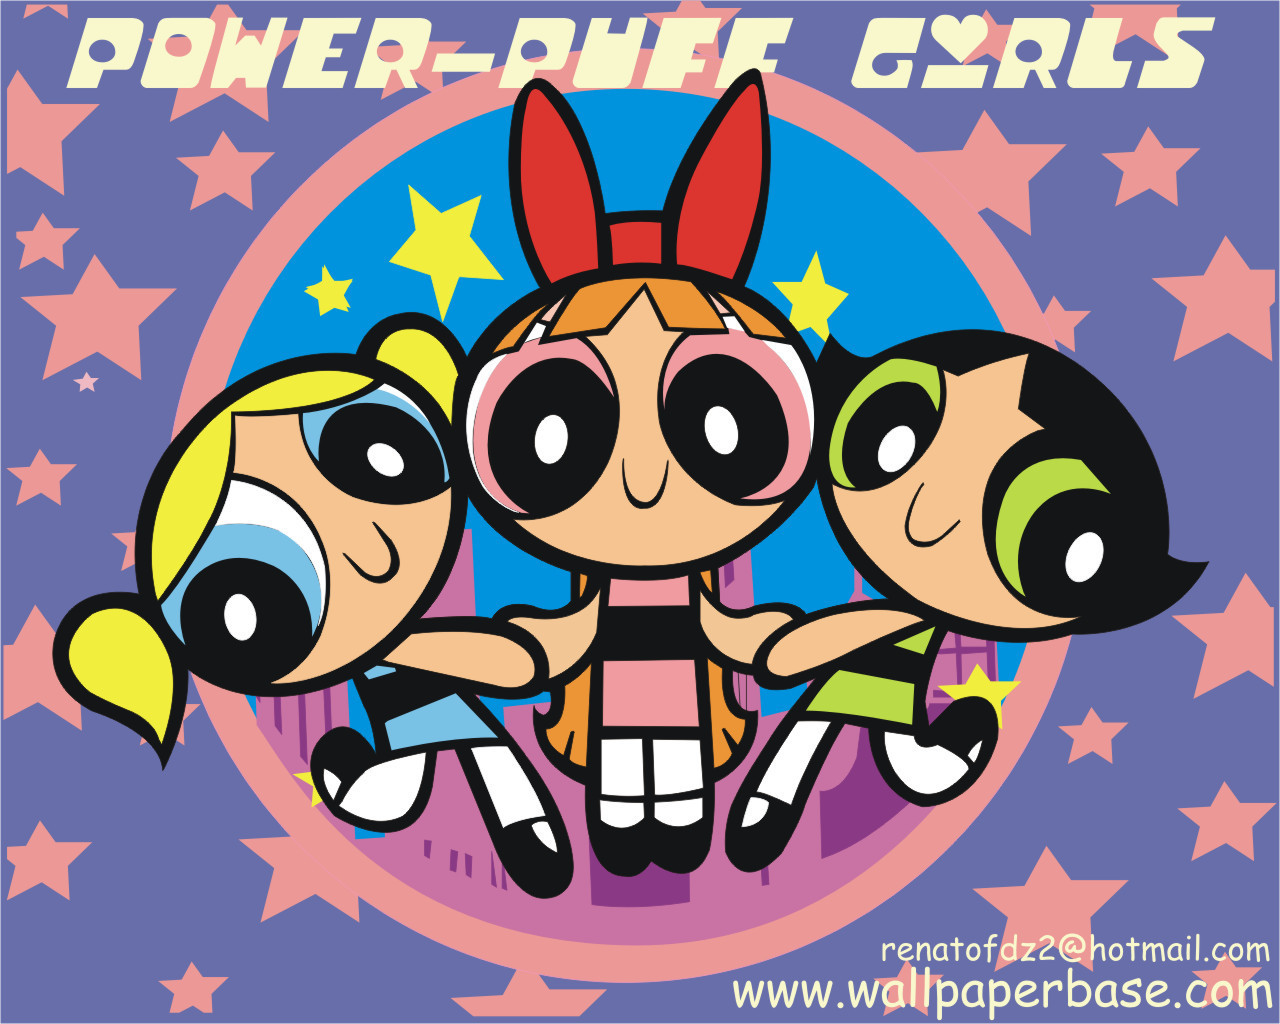 The Powerpuff Girls (1998) Picture